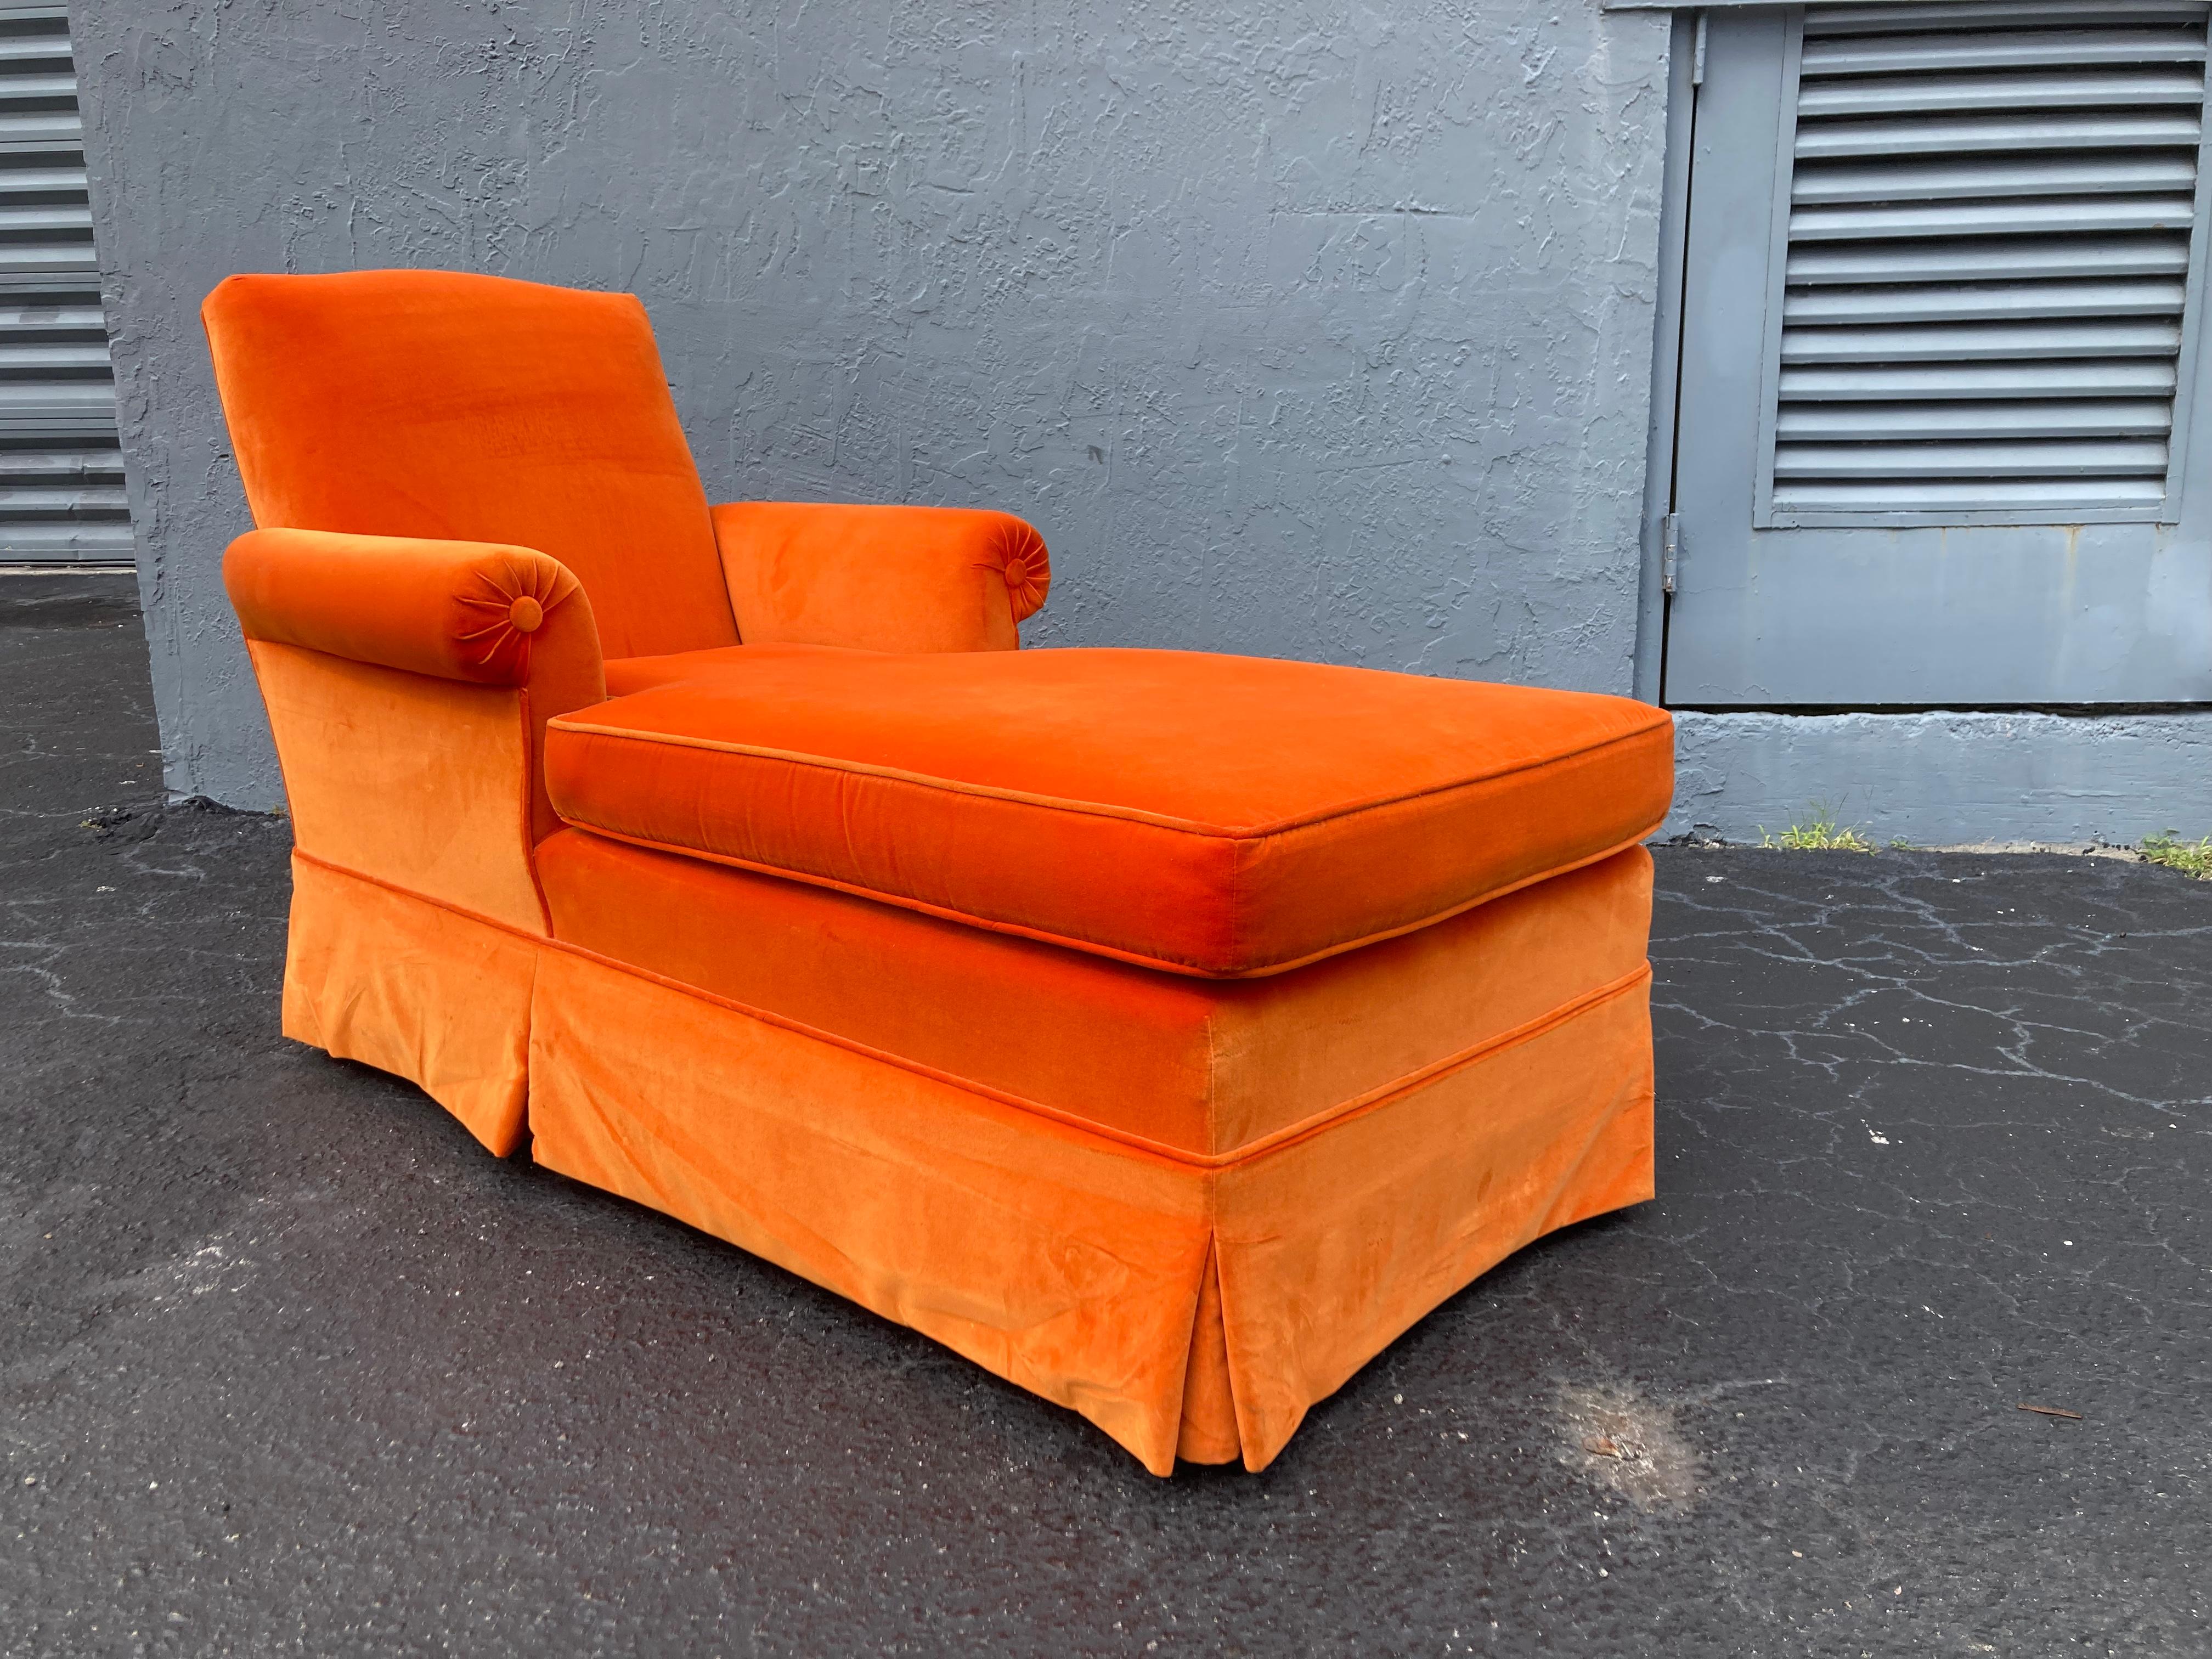 American Modern Orange Chaise Longues Lounge